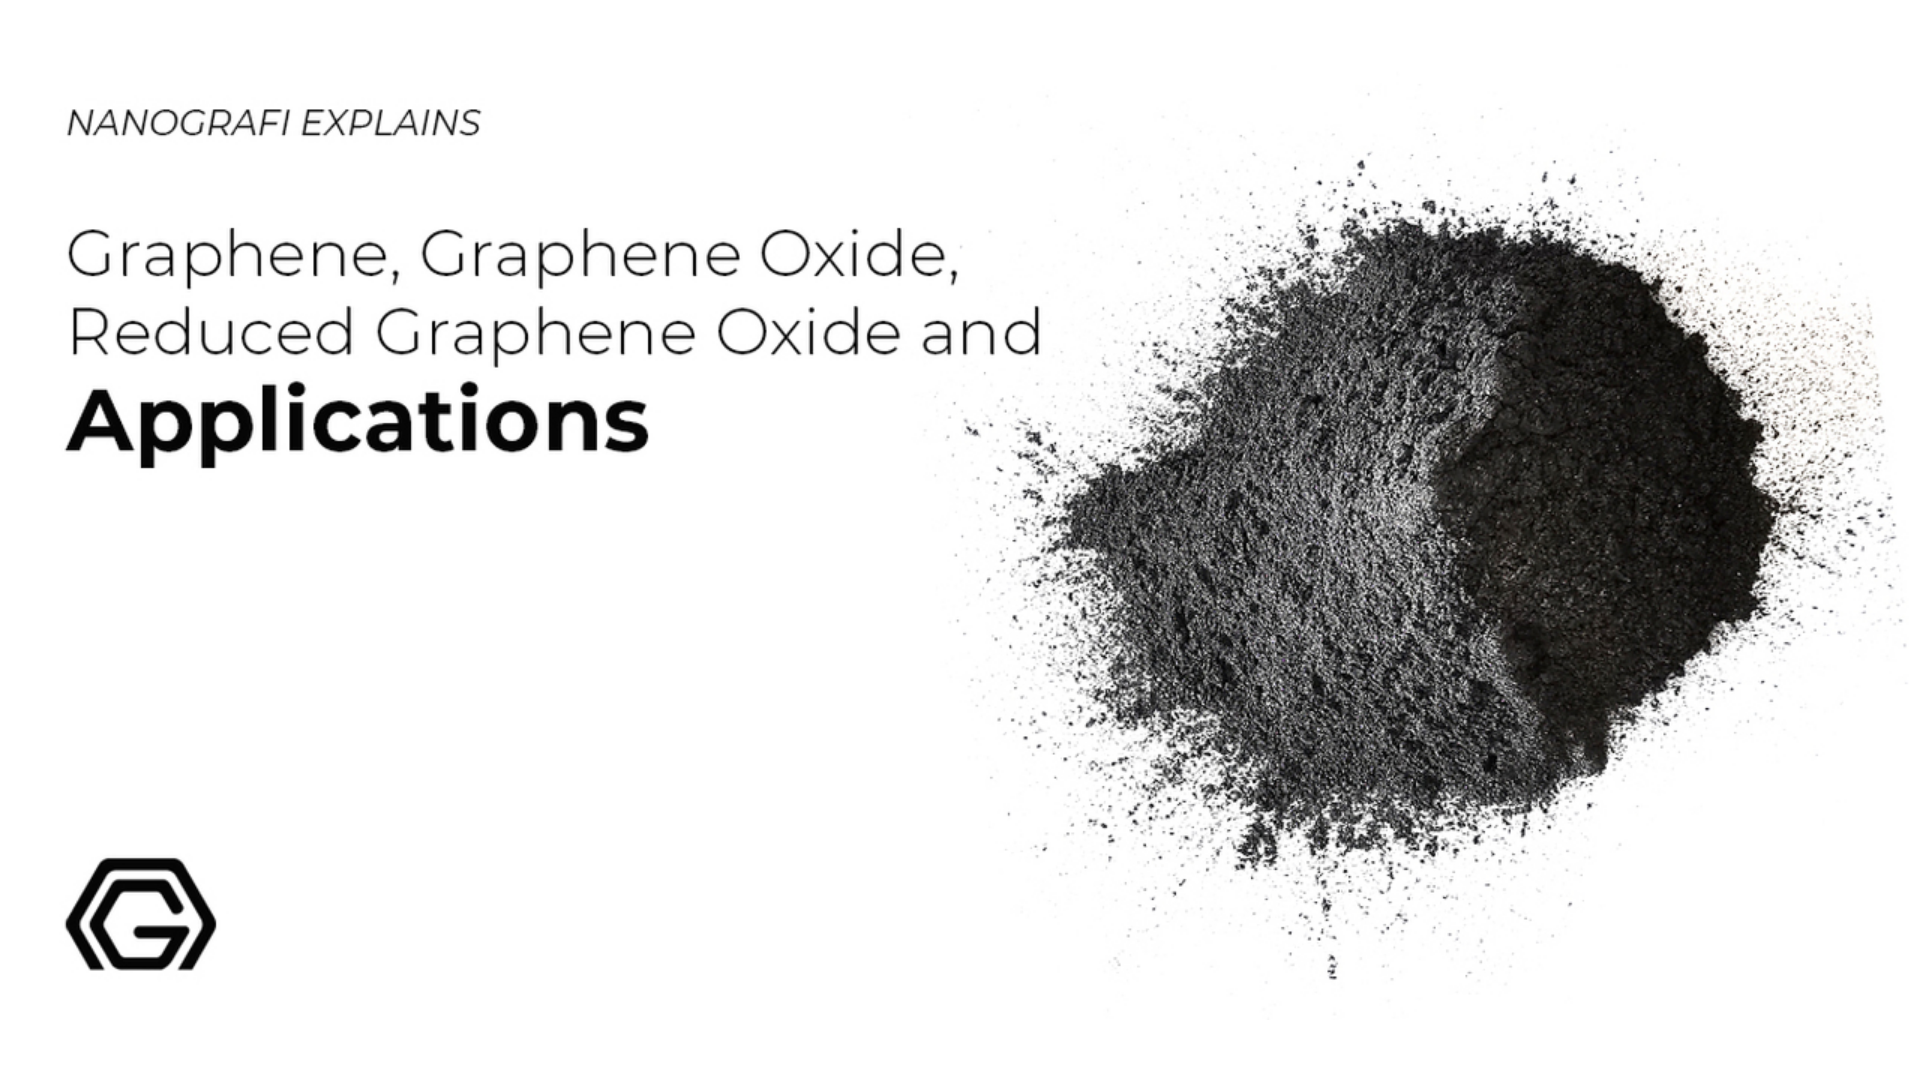 Graphene, graphene oxide, reduced graphene oxide and applications